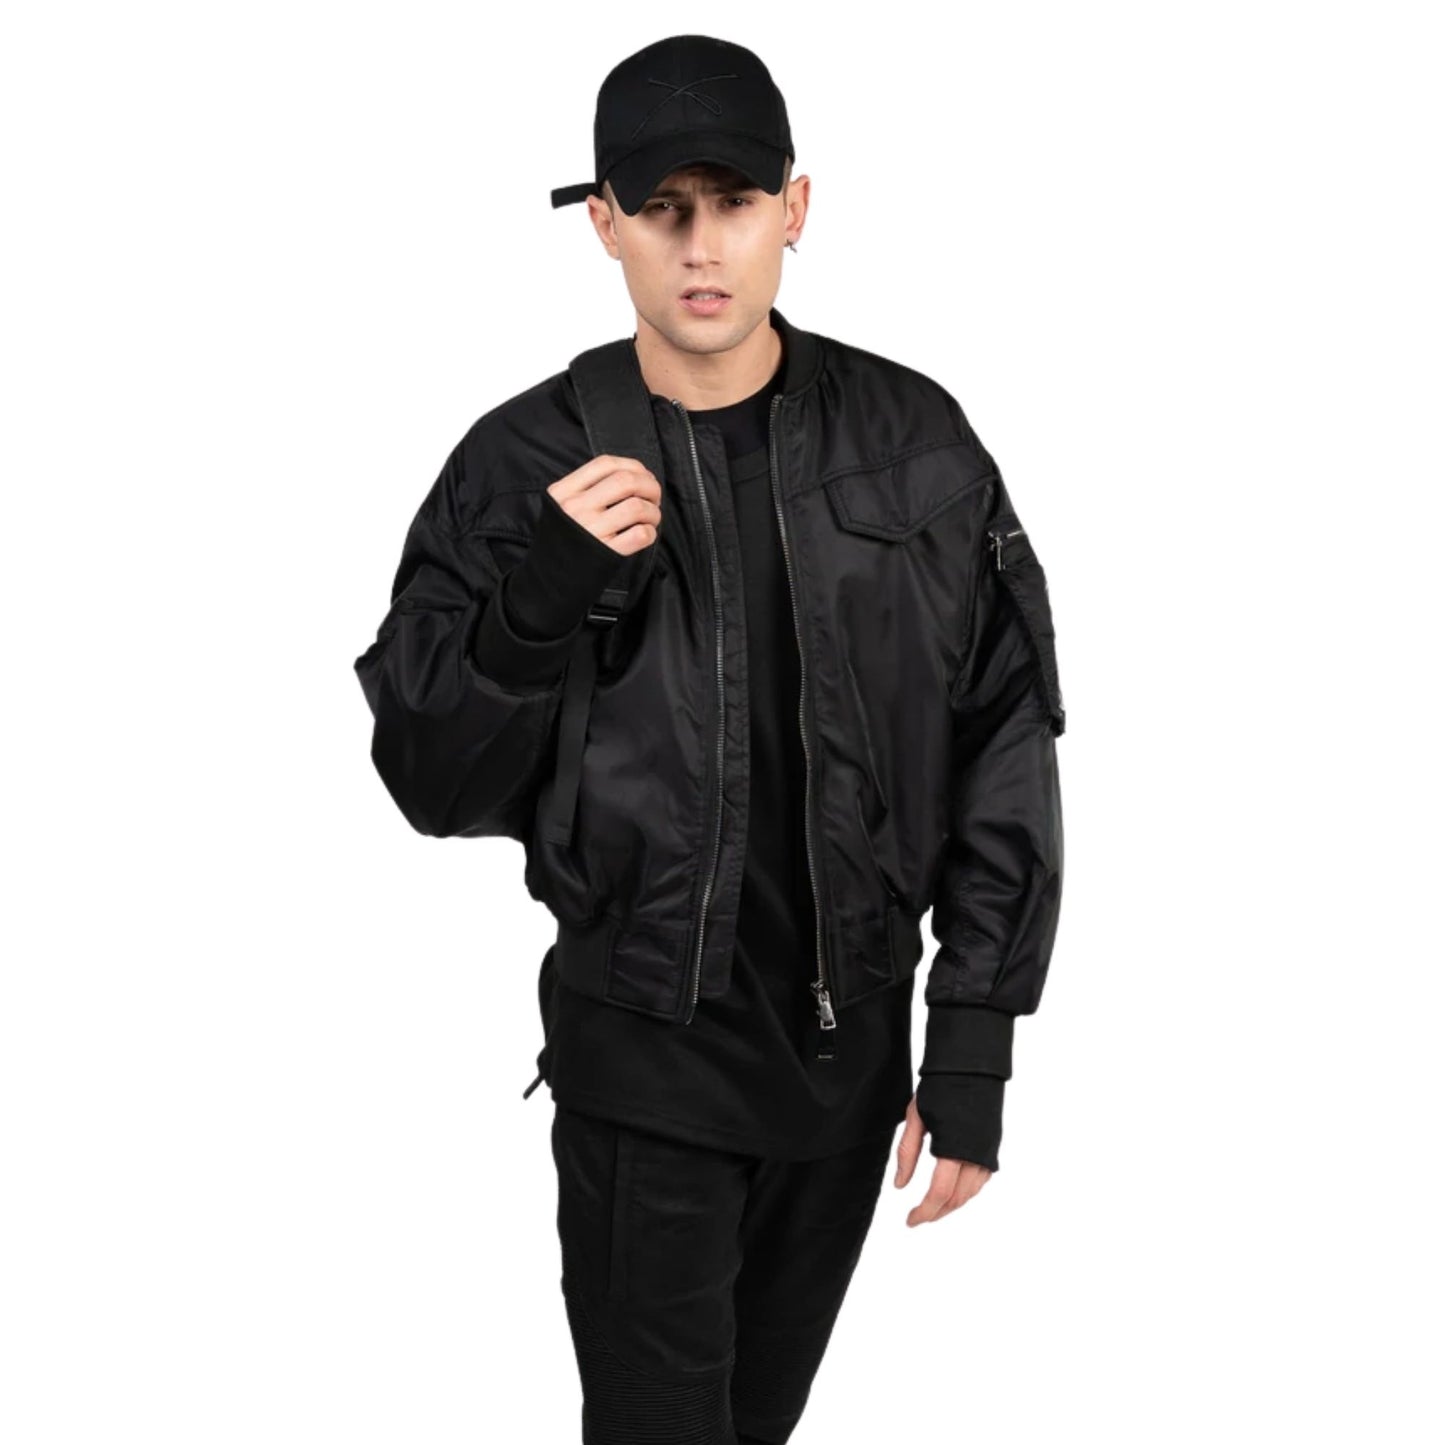 Oversized short black bomber jacket by XIAN ZONE